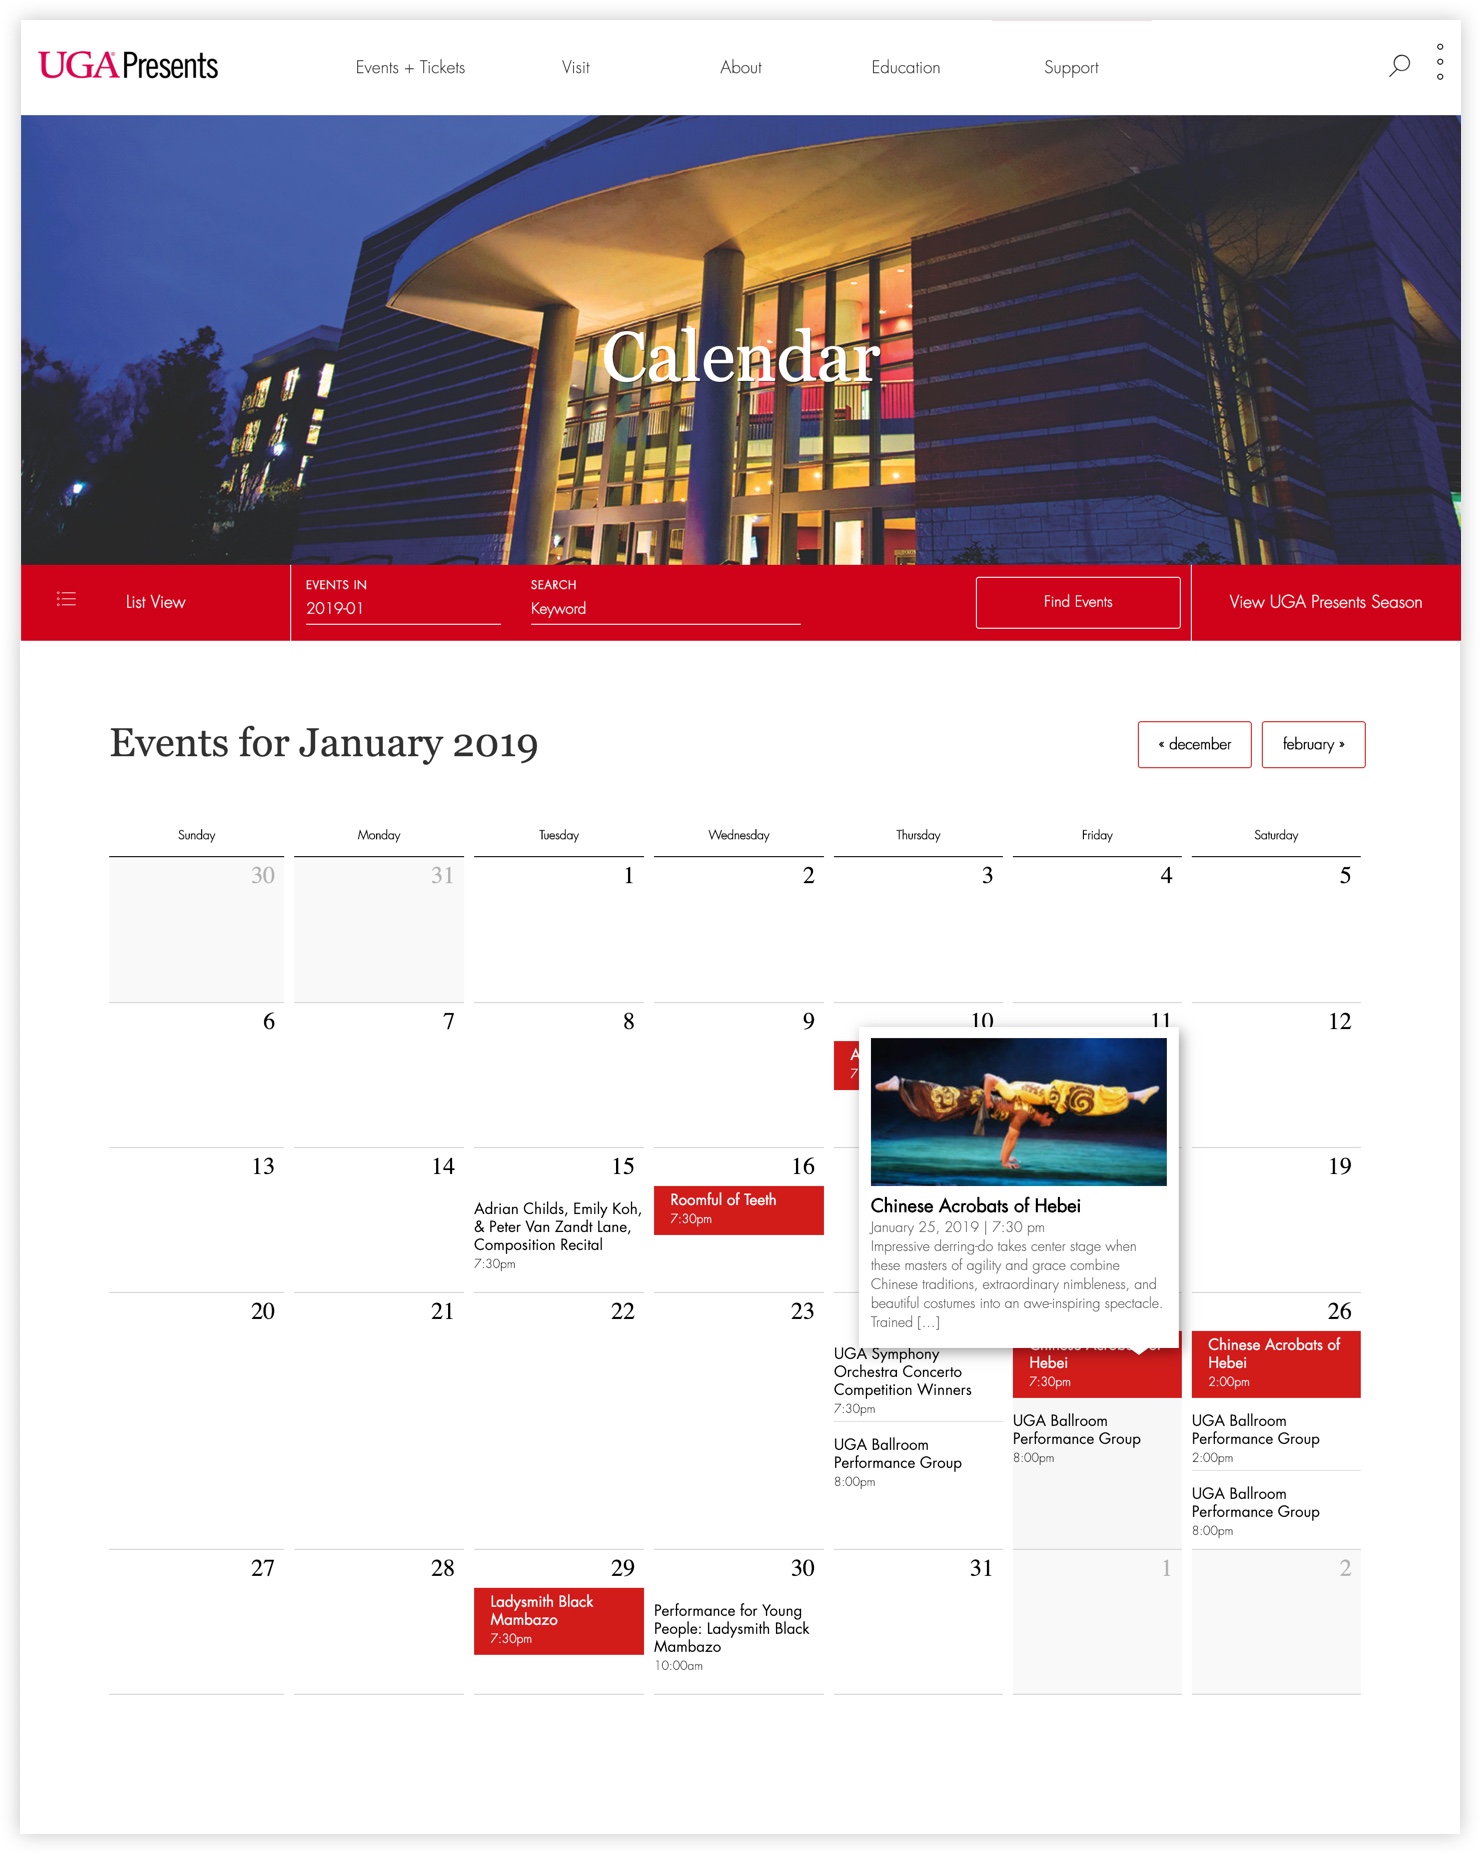 UGA Performing Arts Center calendar